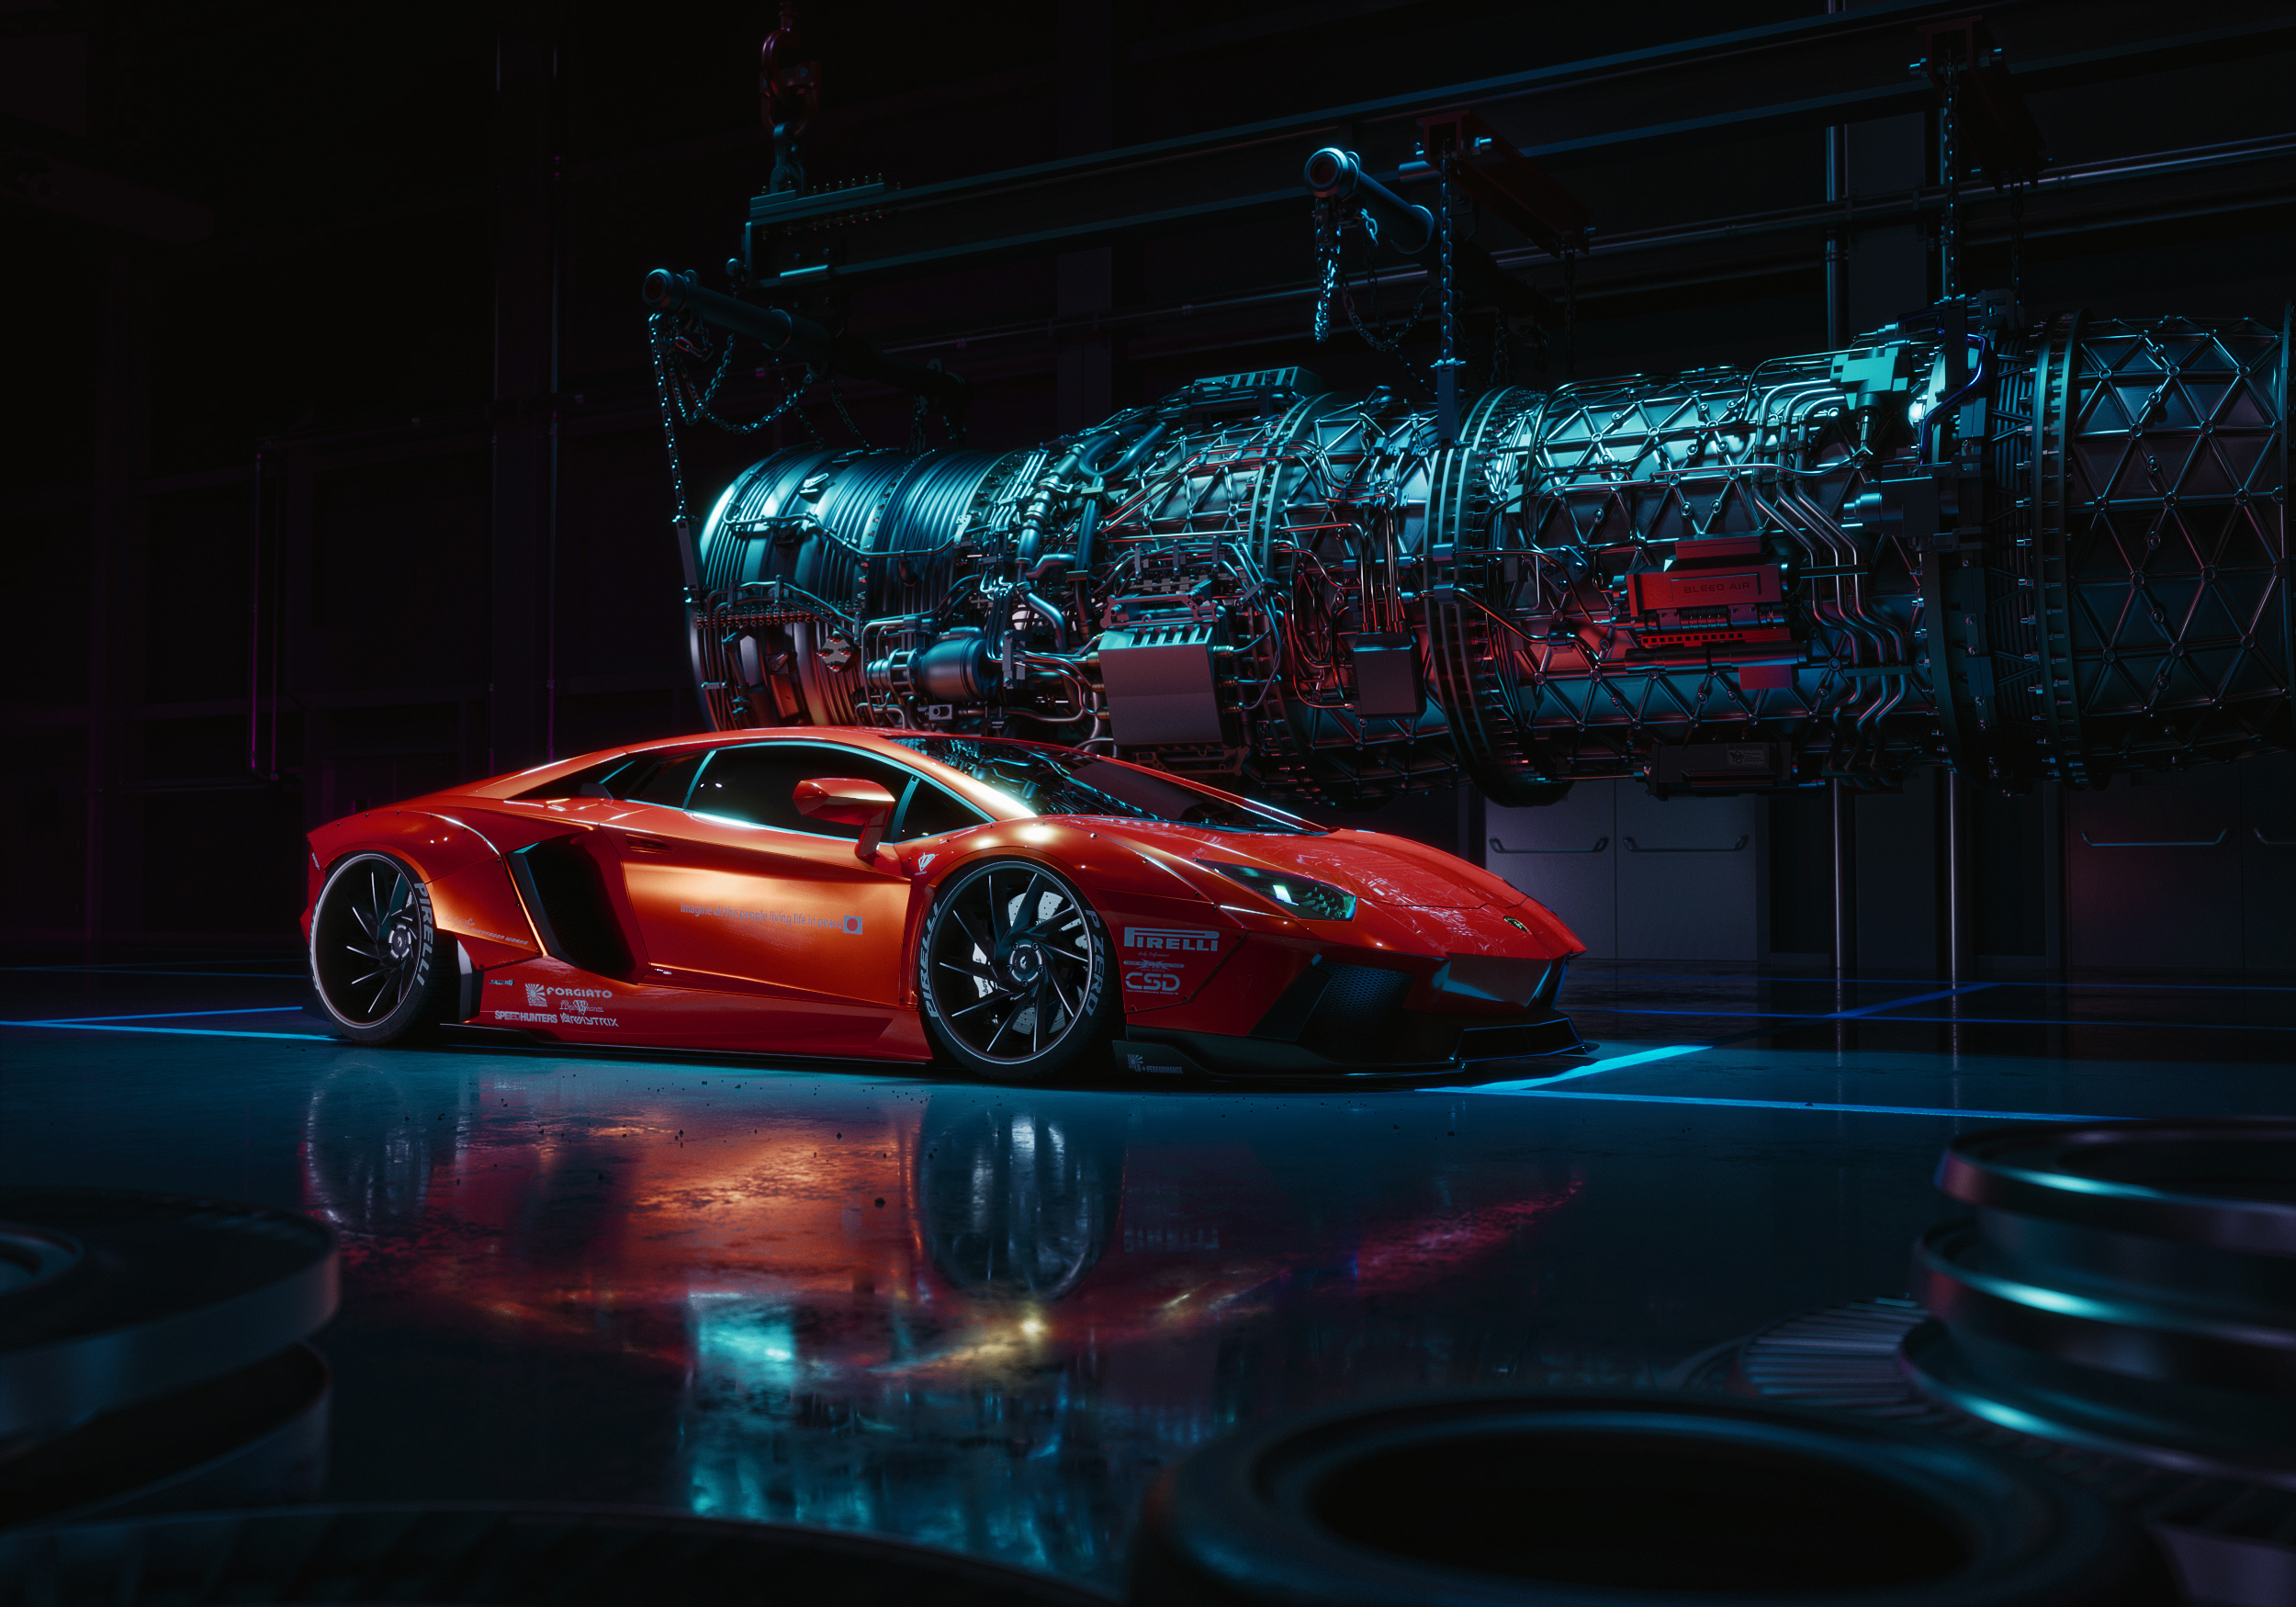 General 2500x1750 Lamborghini Lamborghini Aventador car red cars reflection dark CGI digital art artwork vehicle turbines frontal view Pirelli supercars